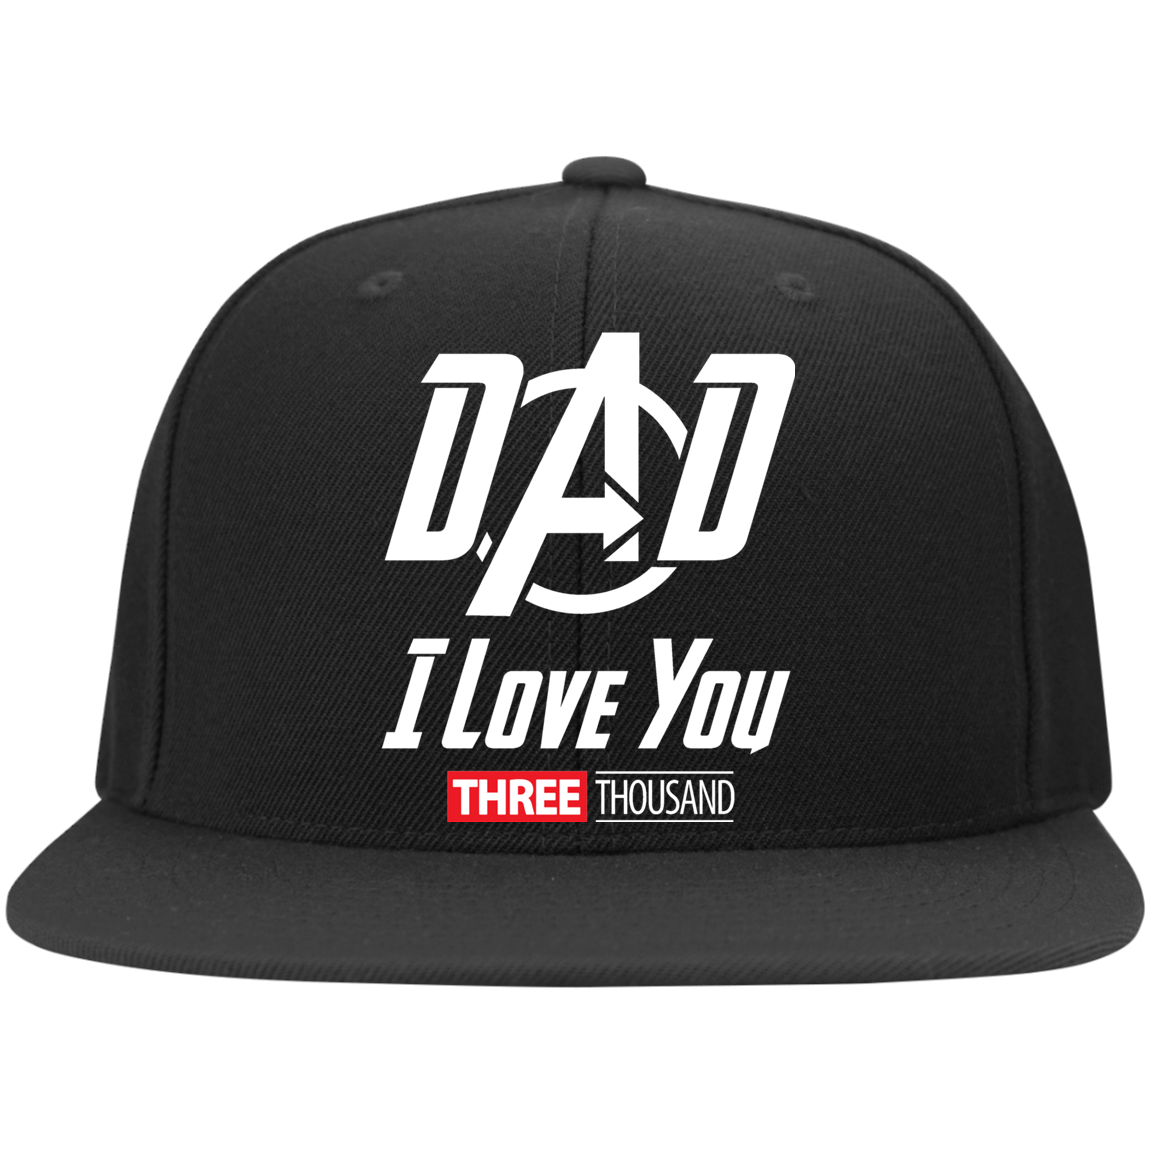 Dad I Love You Three Thousand - Embroidered Flat Bill Twill Flexfit Cap